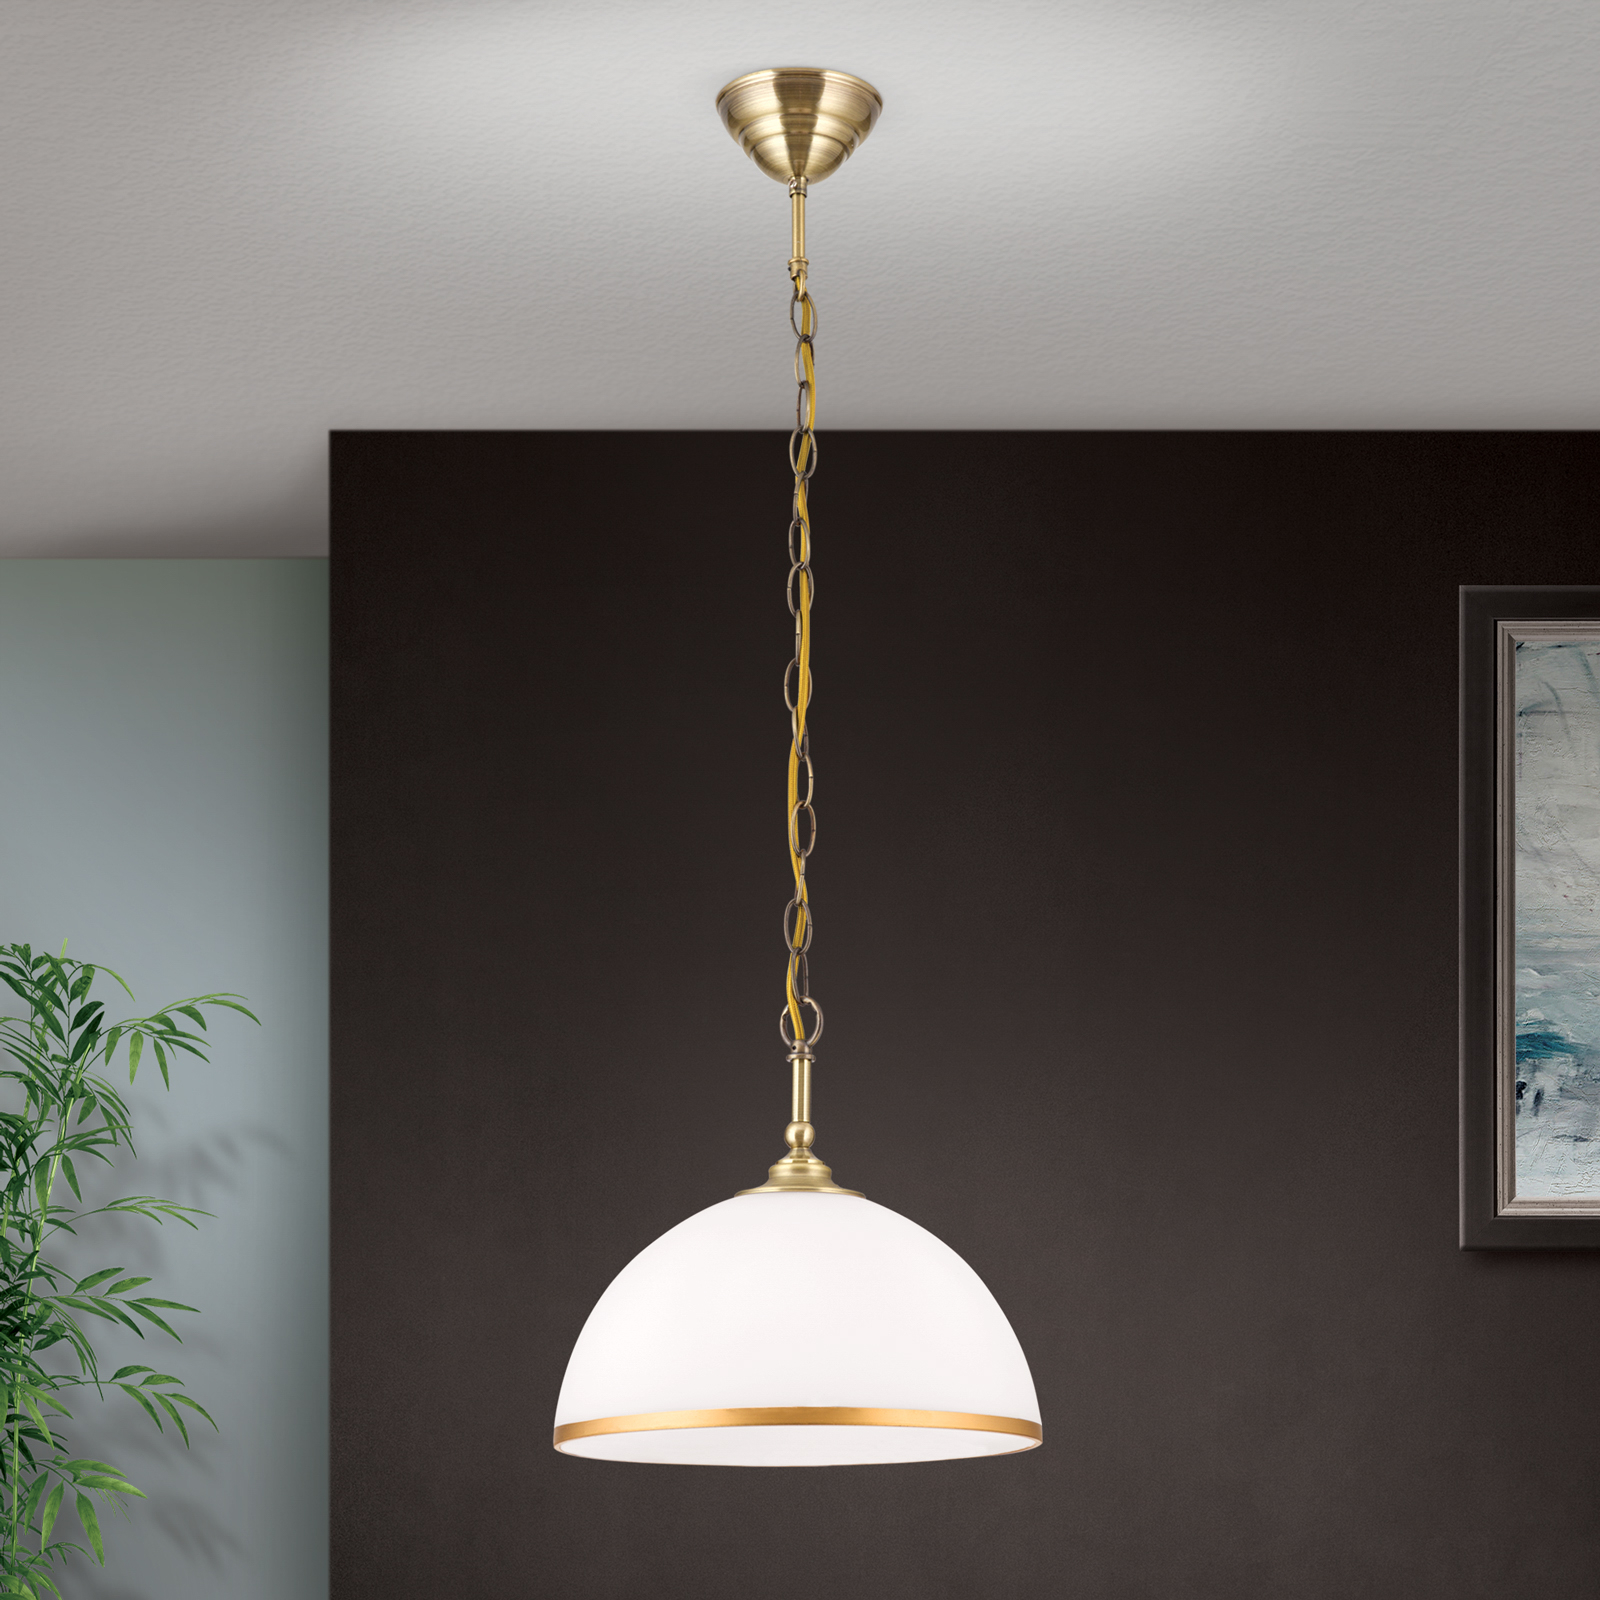 Hanglamp Old Lamp met kettingophanging, 1-lamp